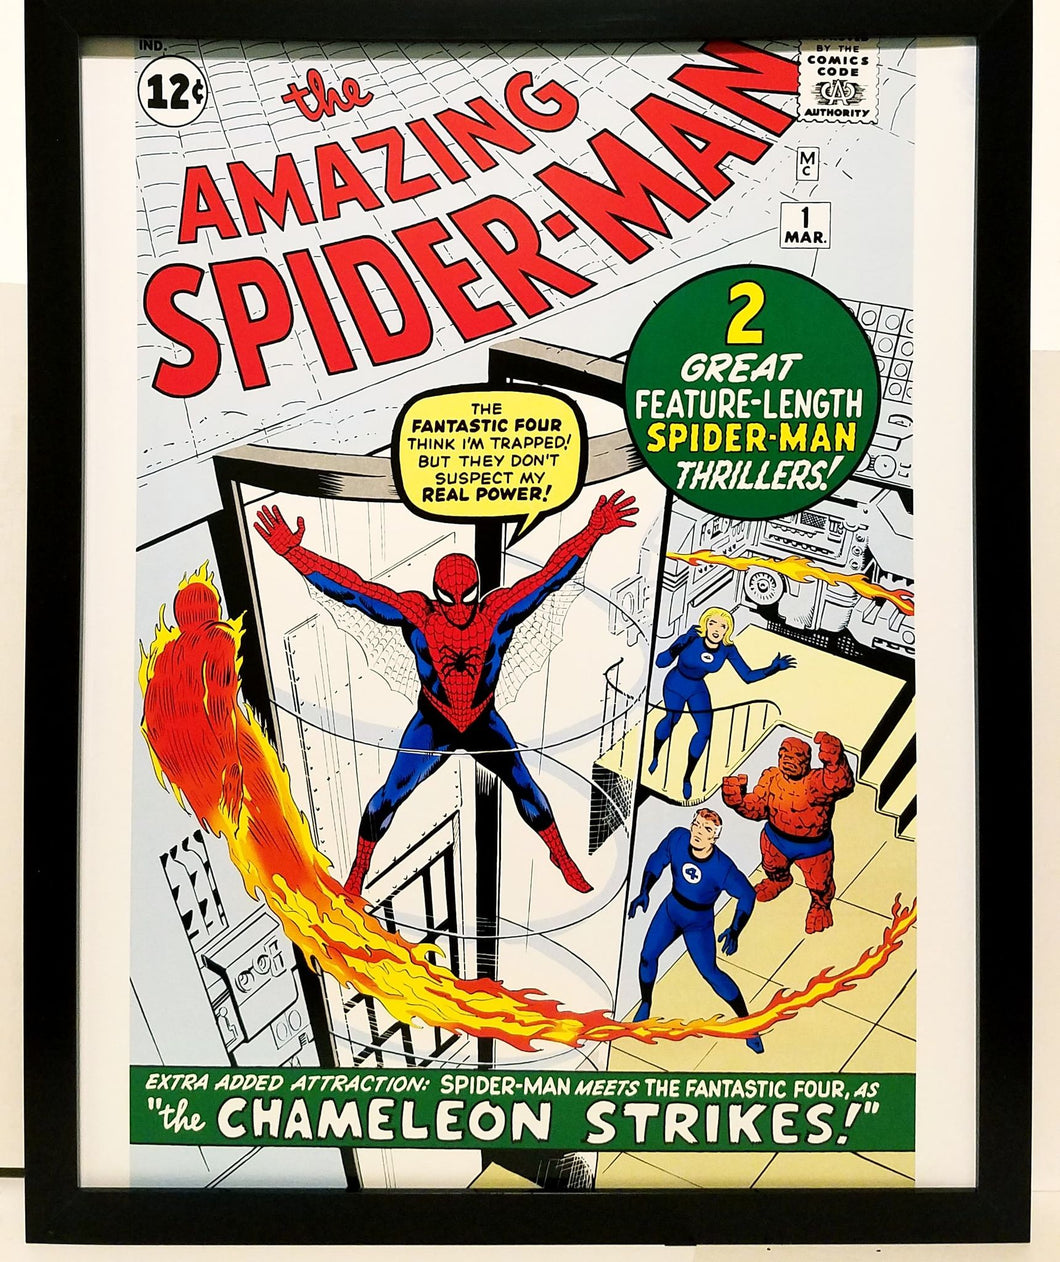 Amazing Spider-Man #1 by Steve Ditko 11x14 FRAMED Marvel Comics Art Print Poster